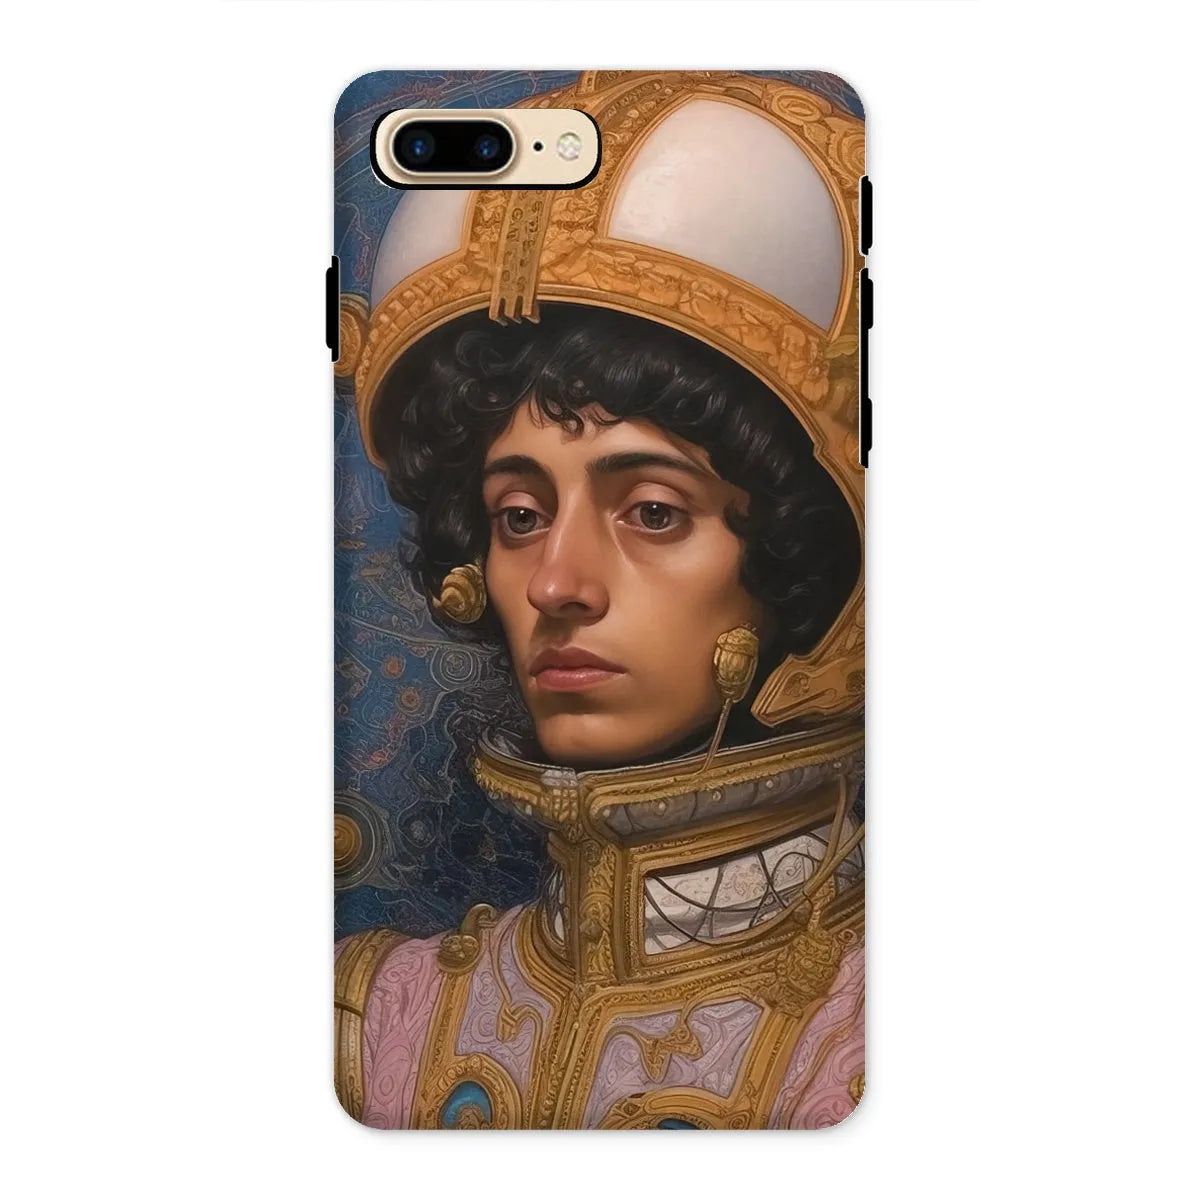 Samir The Gay Astronaut - Lgbtq Art Phone Case - Iphone 8 Plus / Matte - Mobile Phone Cases - Aesthetic Art